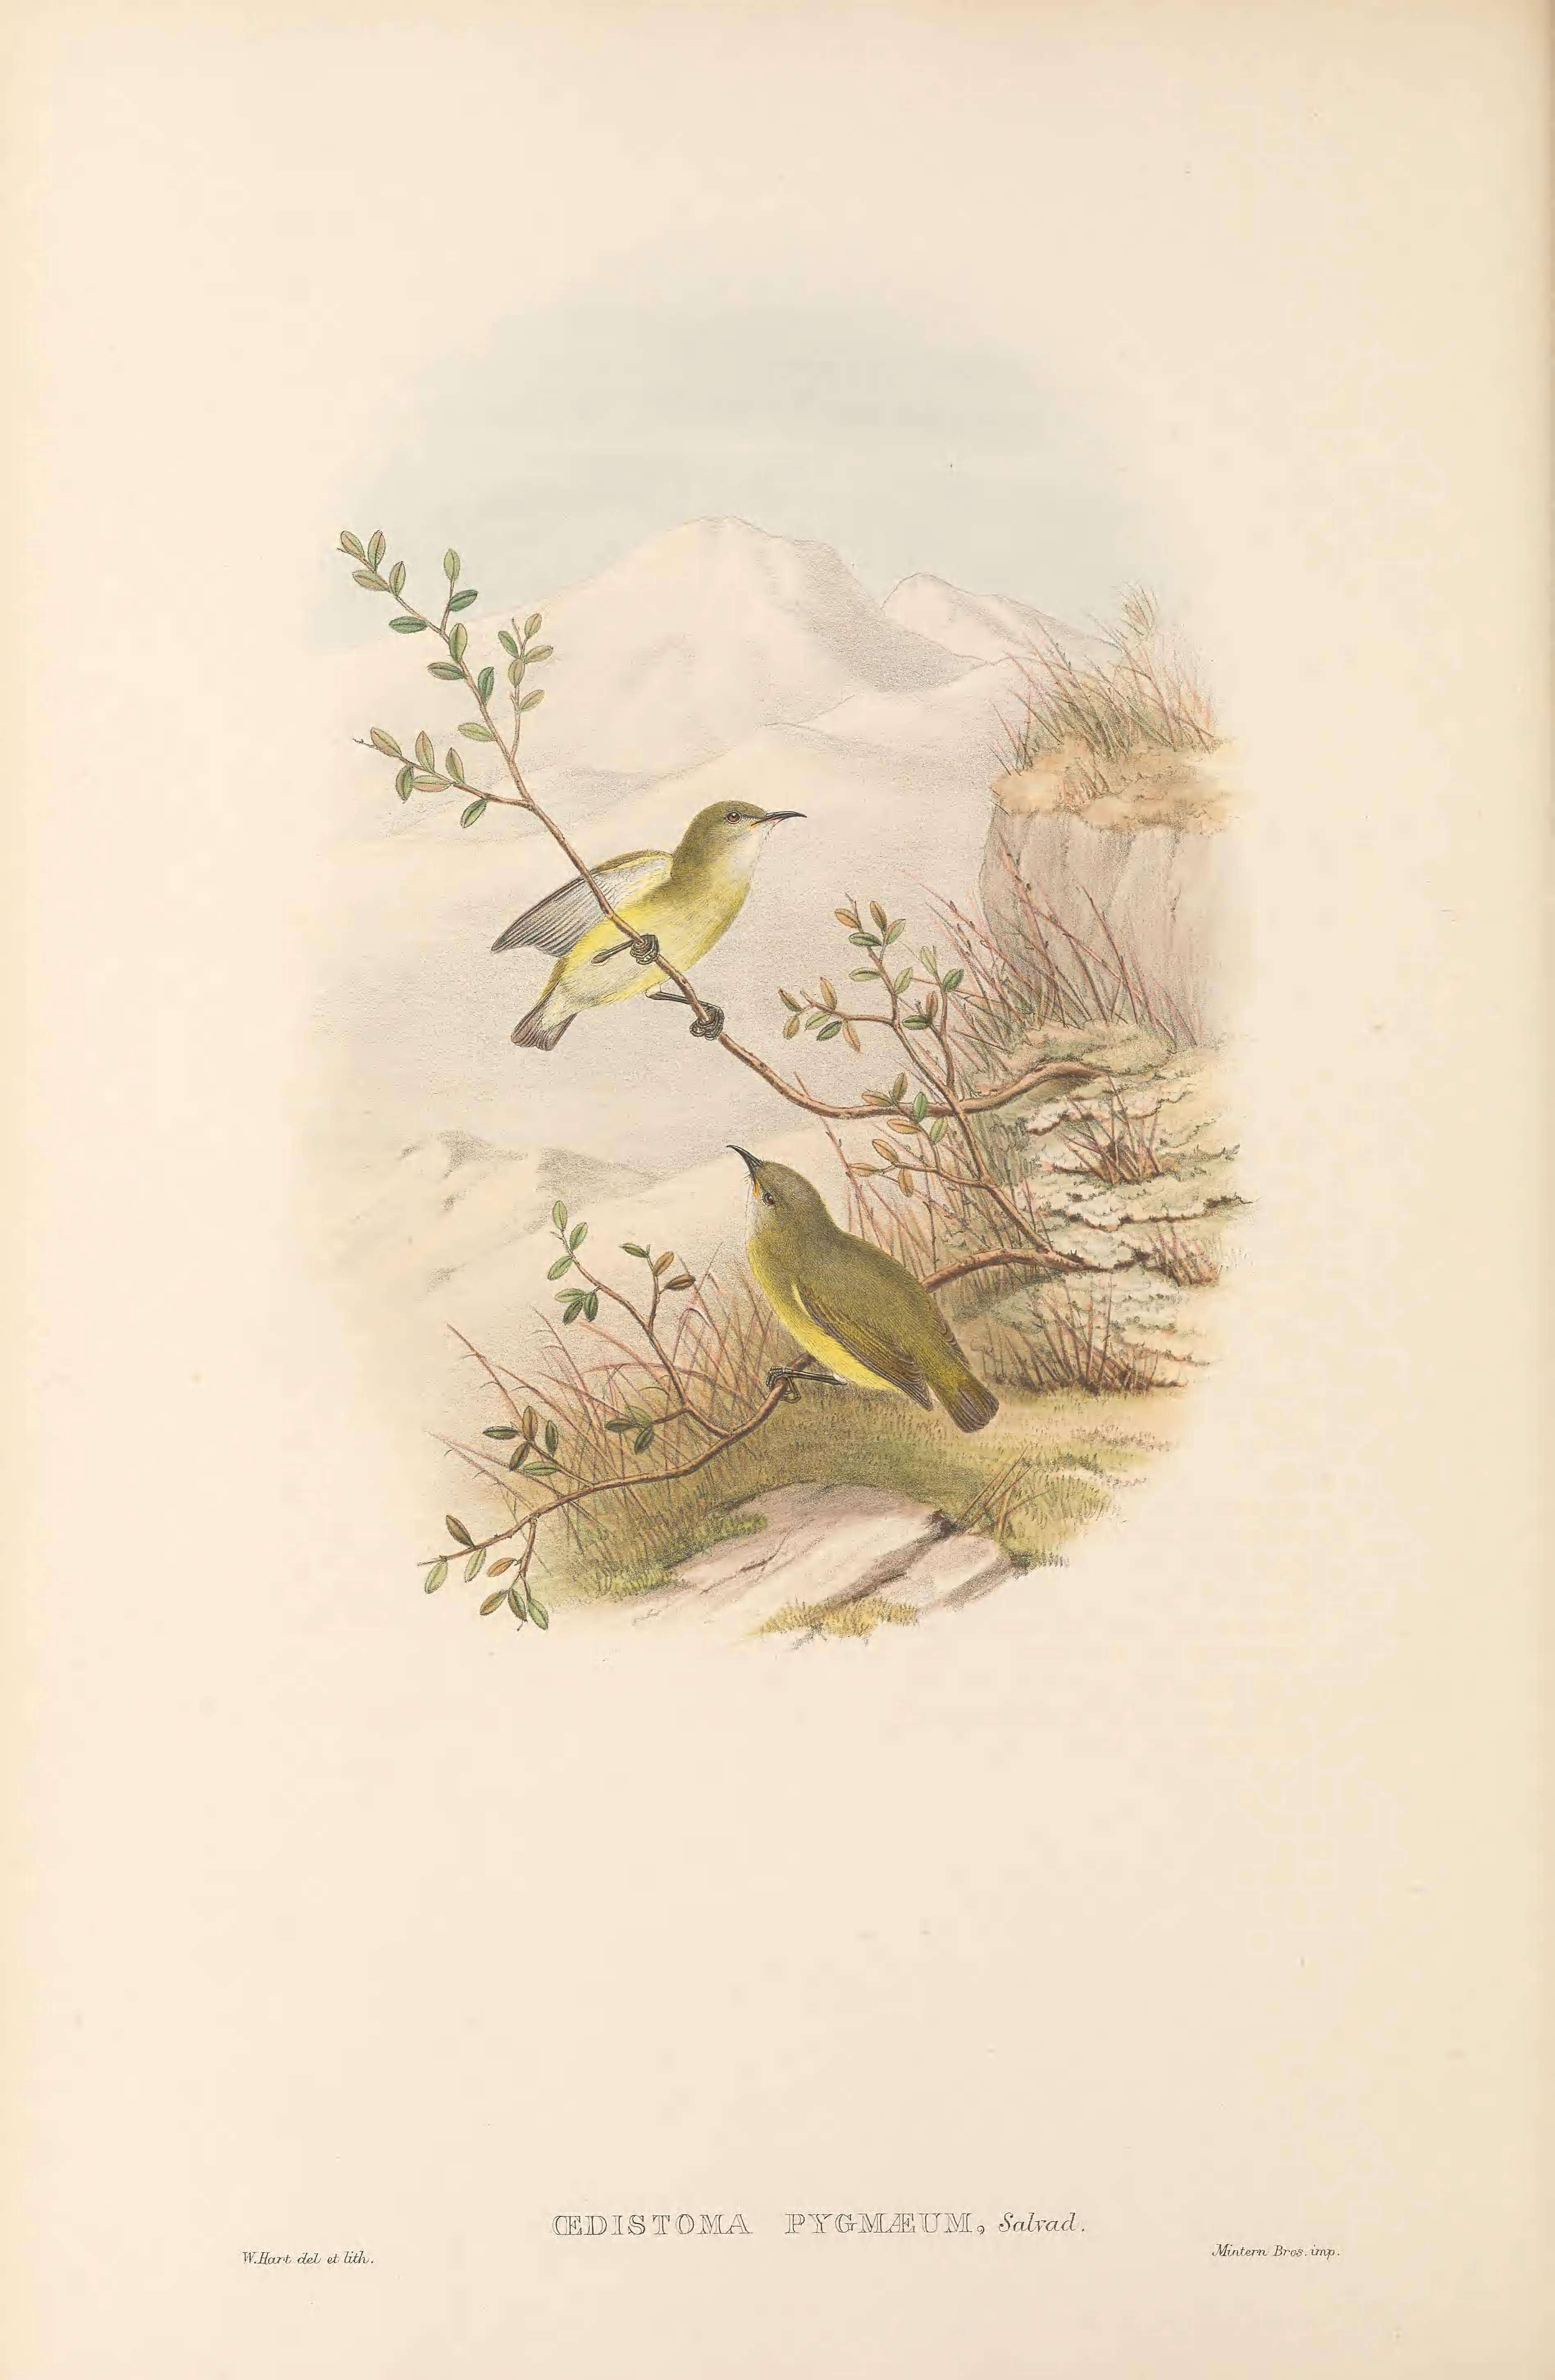 Image of Oedistoma Salvadori 1876